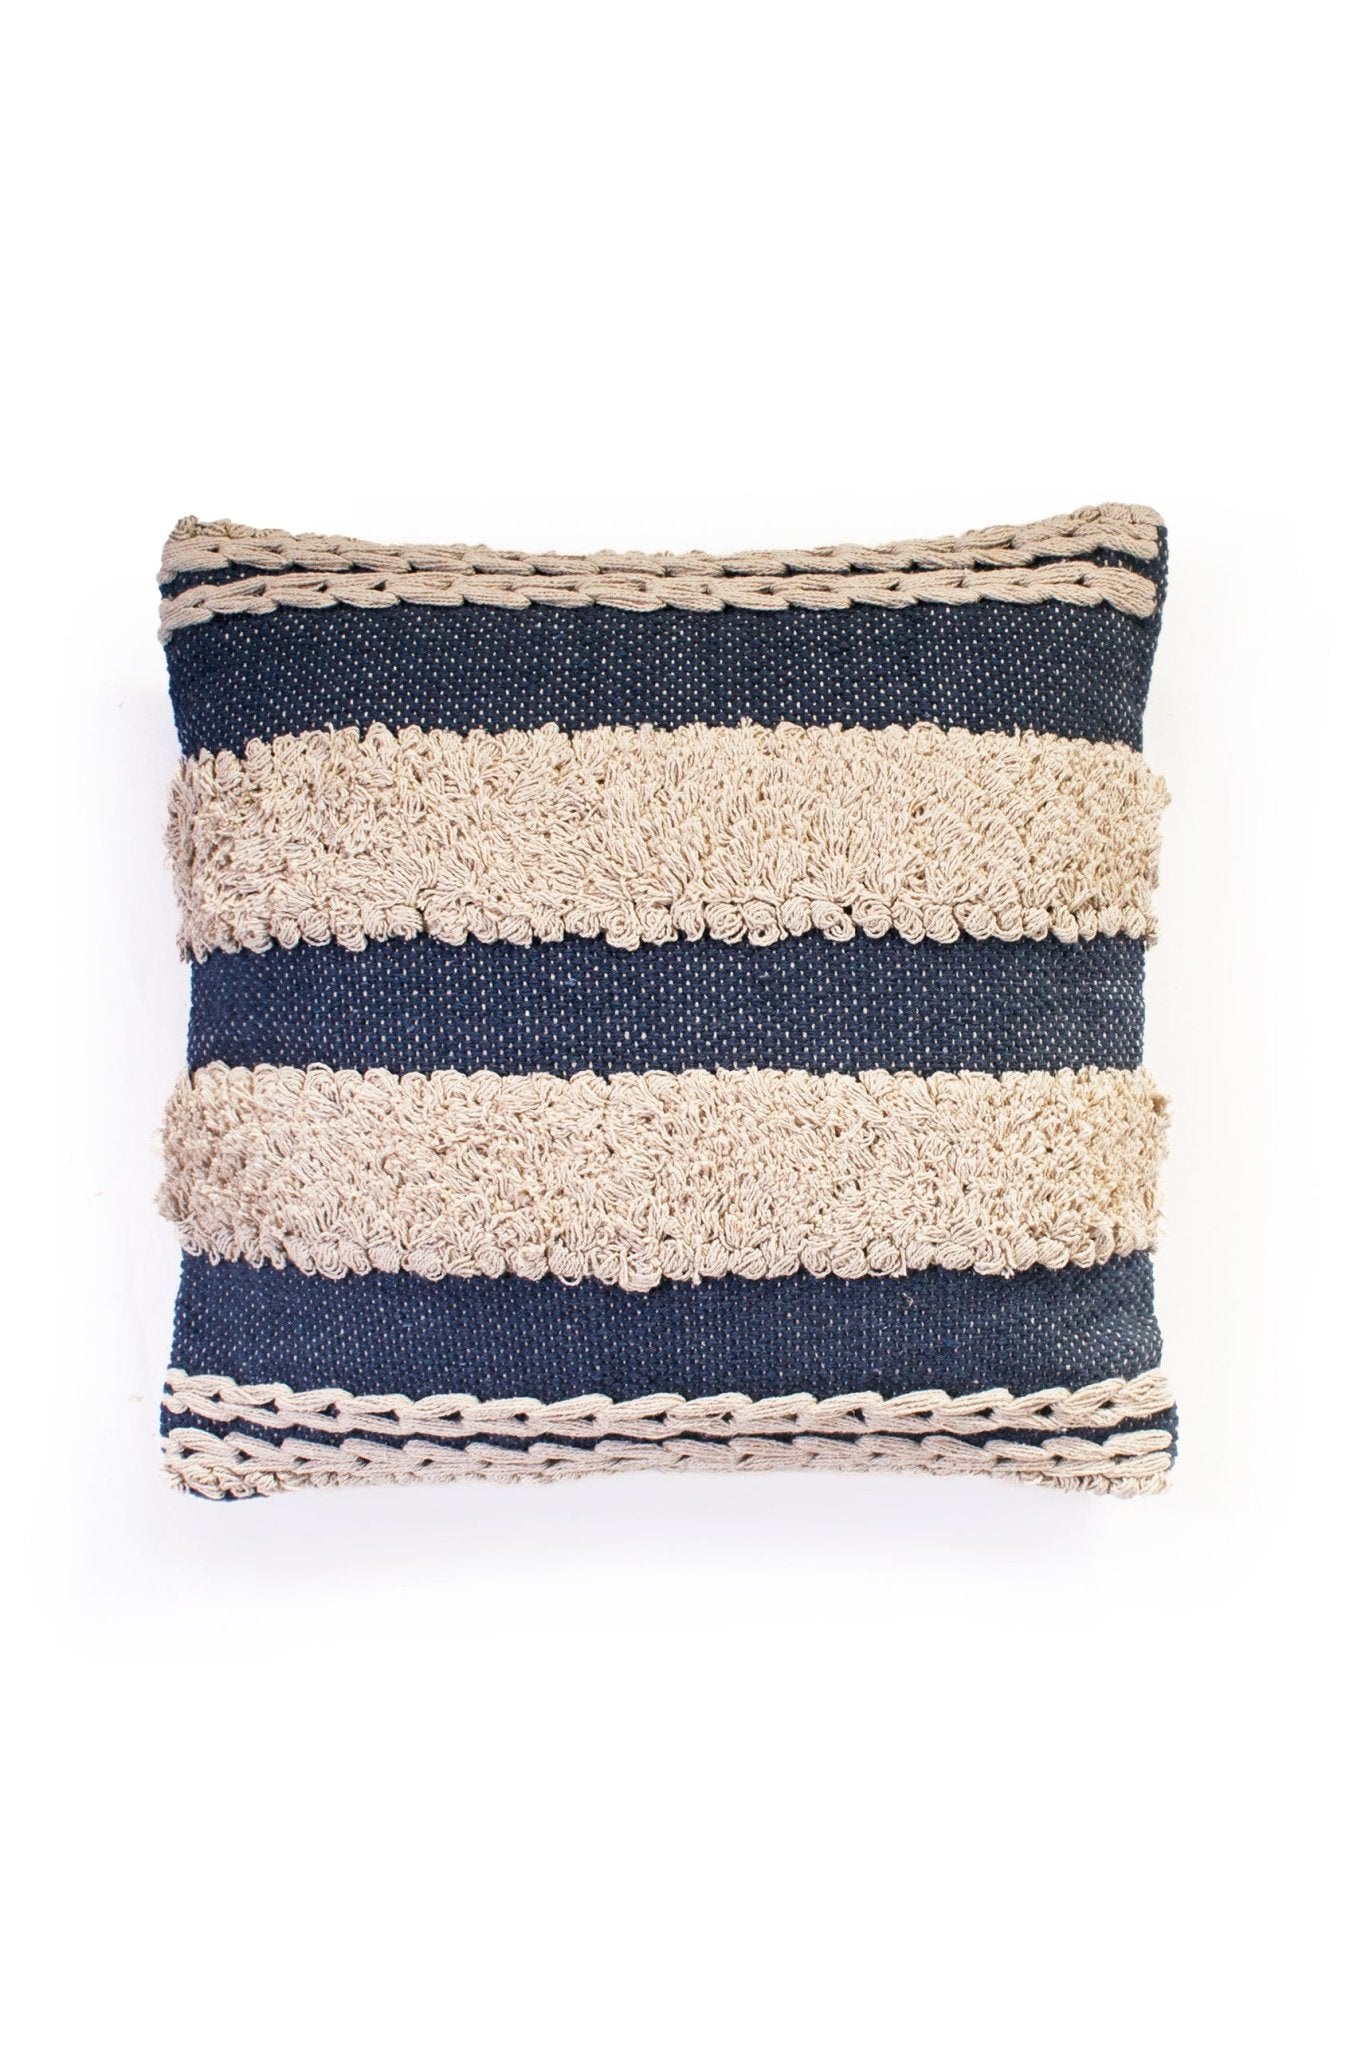 Handmade Indigo and Cream Tufted Cushion Cover - Biggs & Hill - Cushion Covers - 18 inch - 45cm - blue - cotton - striped